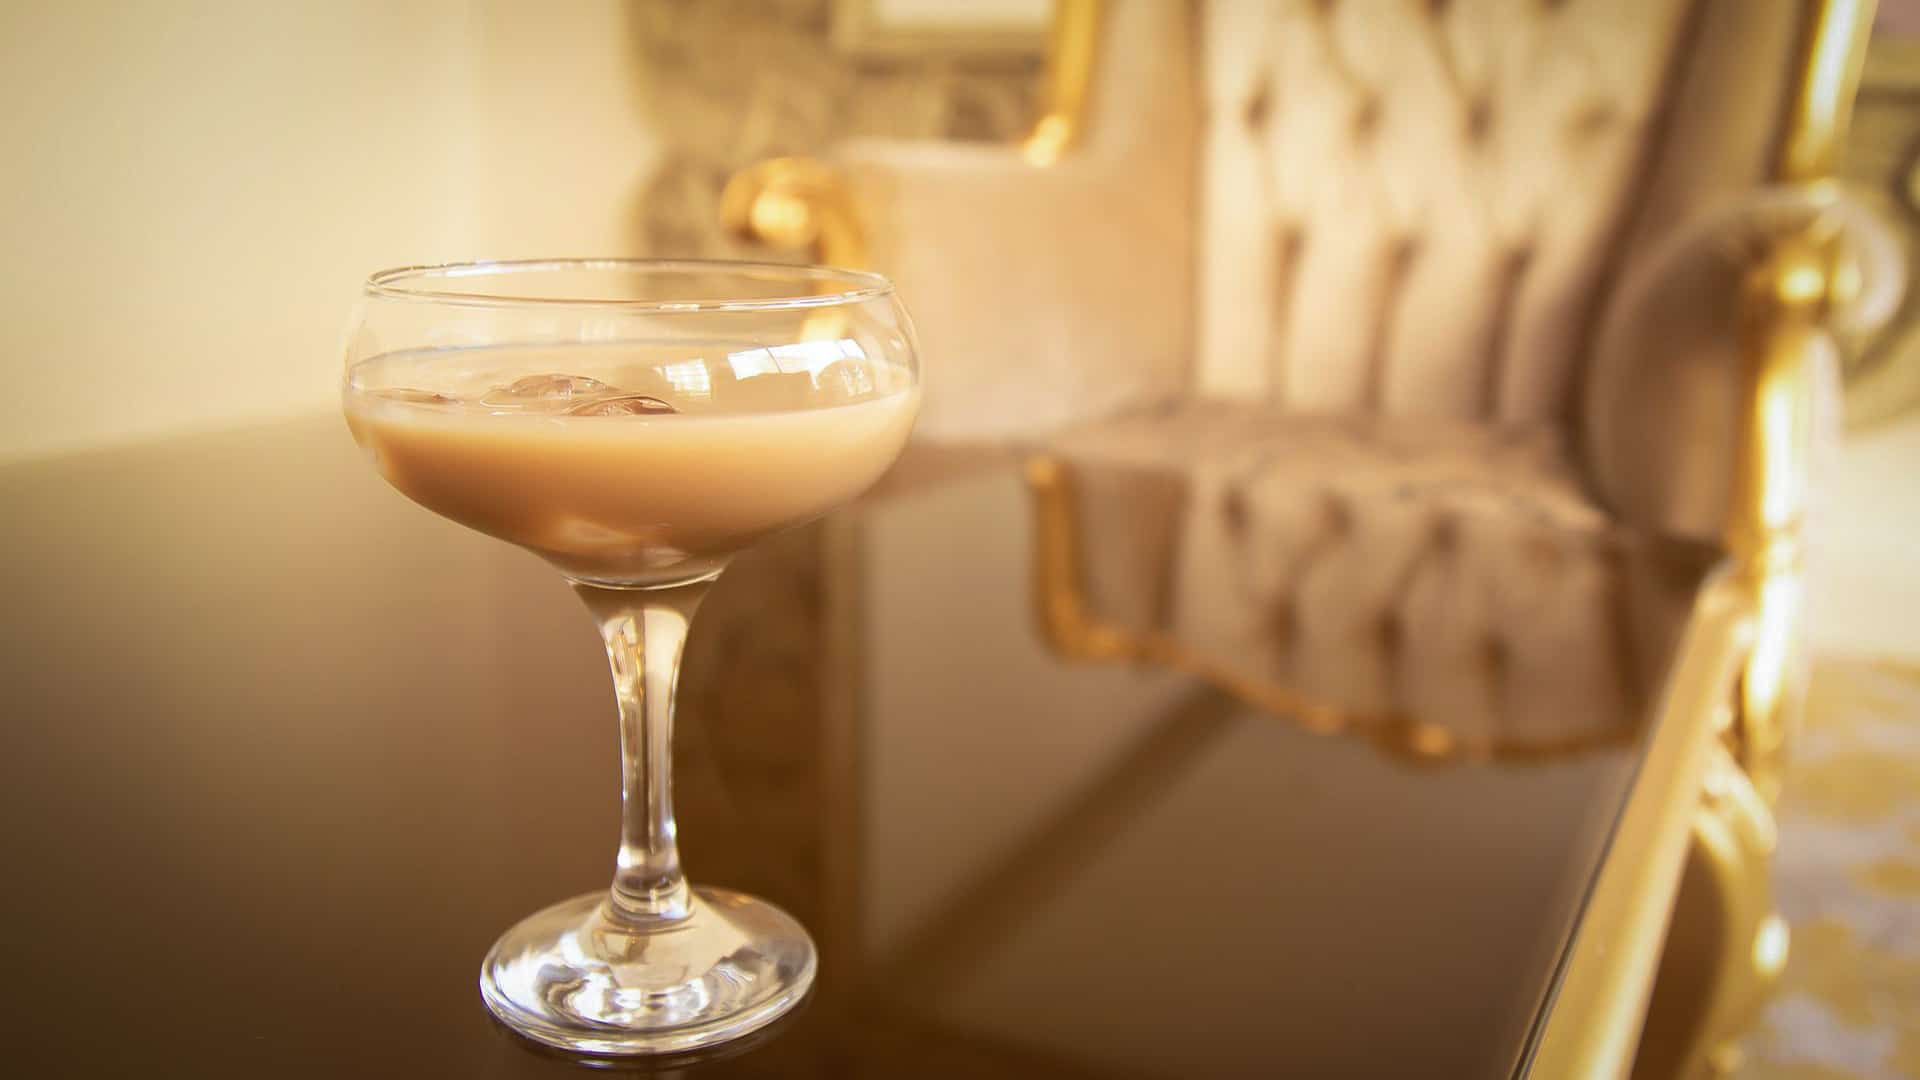 Baileys Salted Caramel Martini